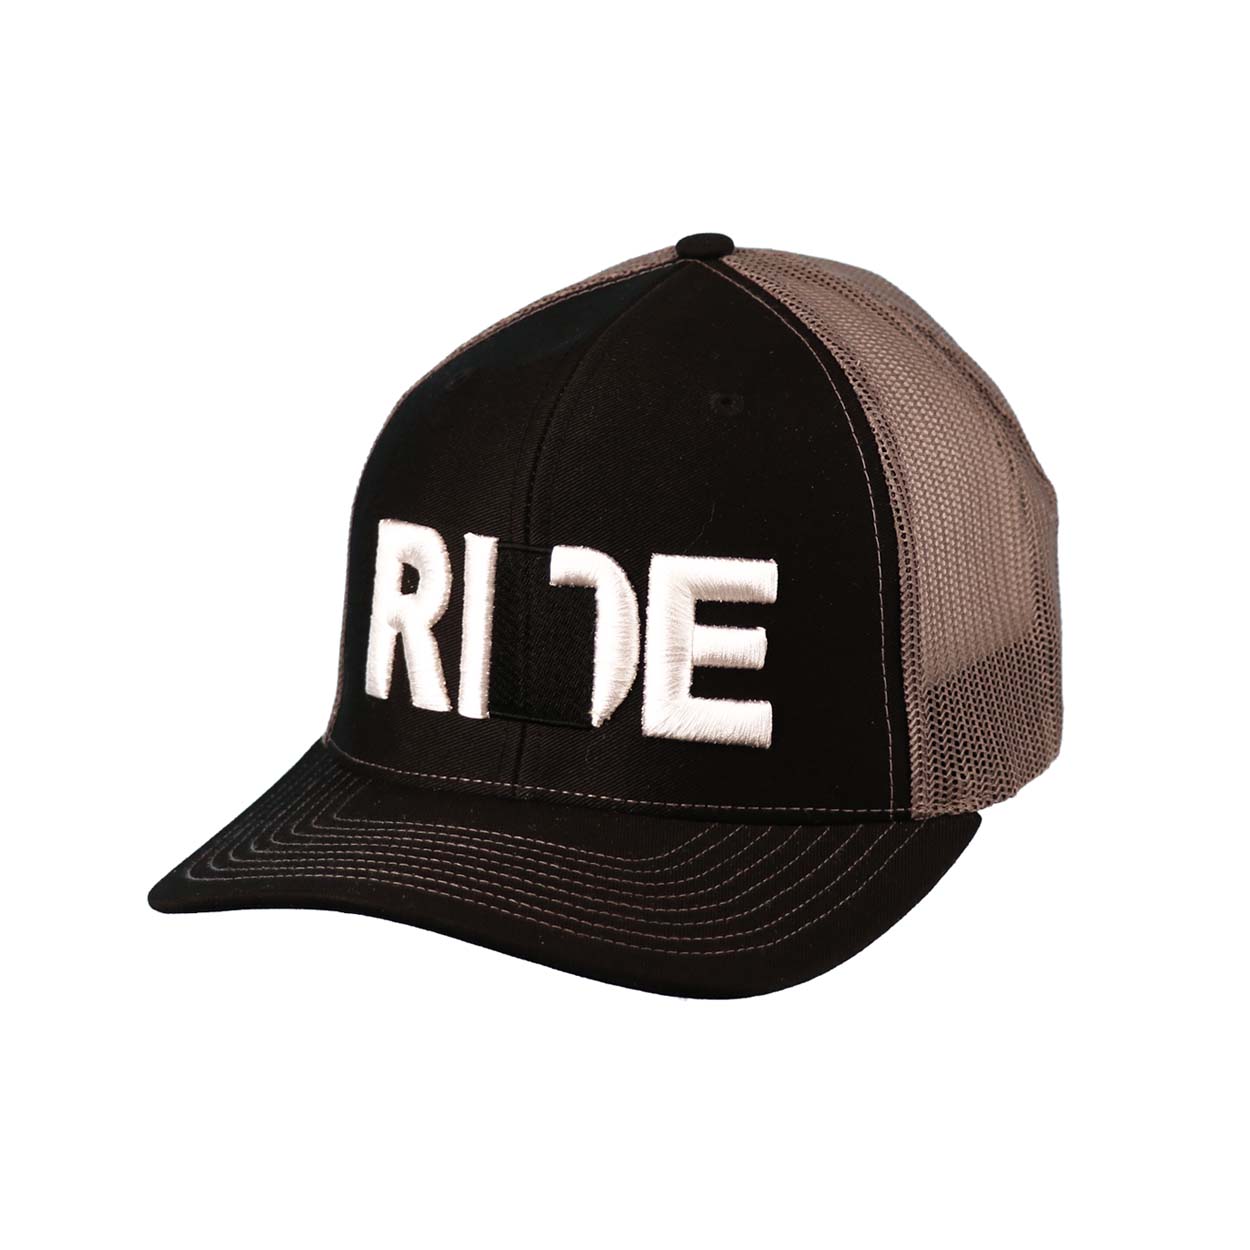 Ride Utah Classic Embroidered Snapback Trucker Hat Black/Charcoal